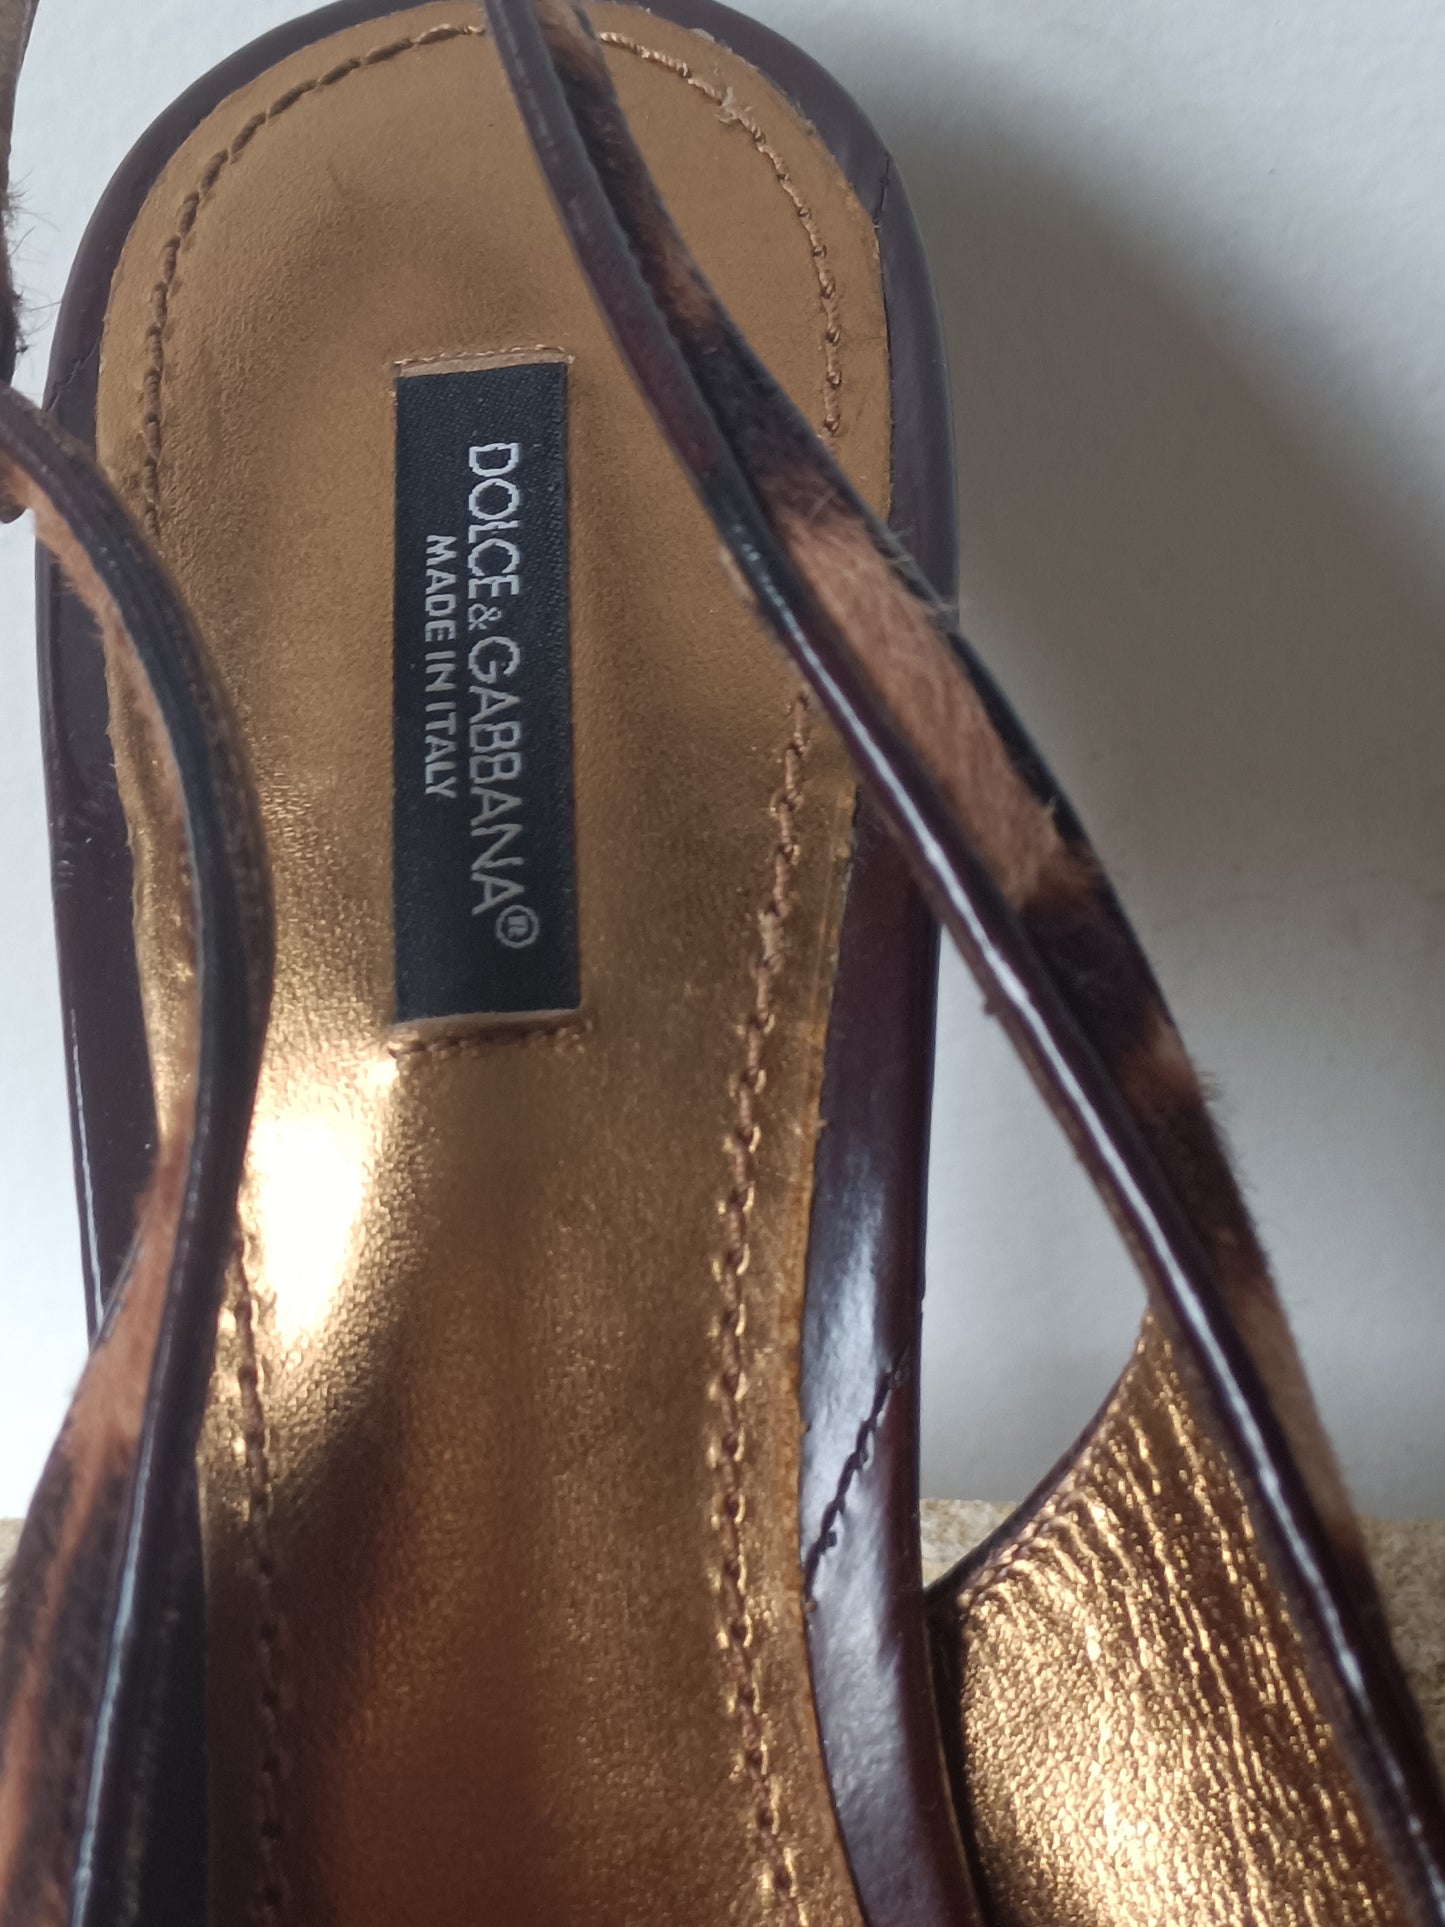 Dolce & Gabbanna - Pony Hair Leopard Print Slingback Heels - Size 39